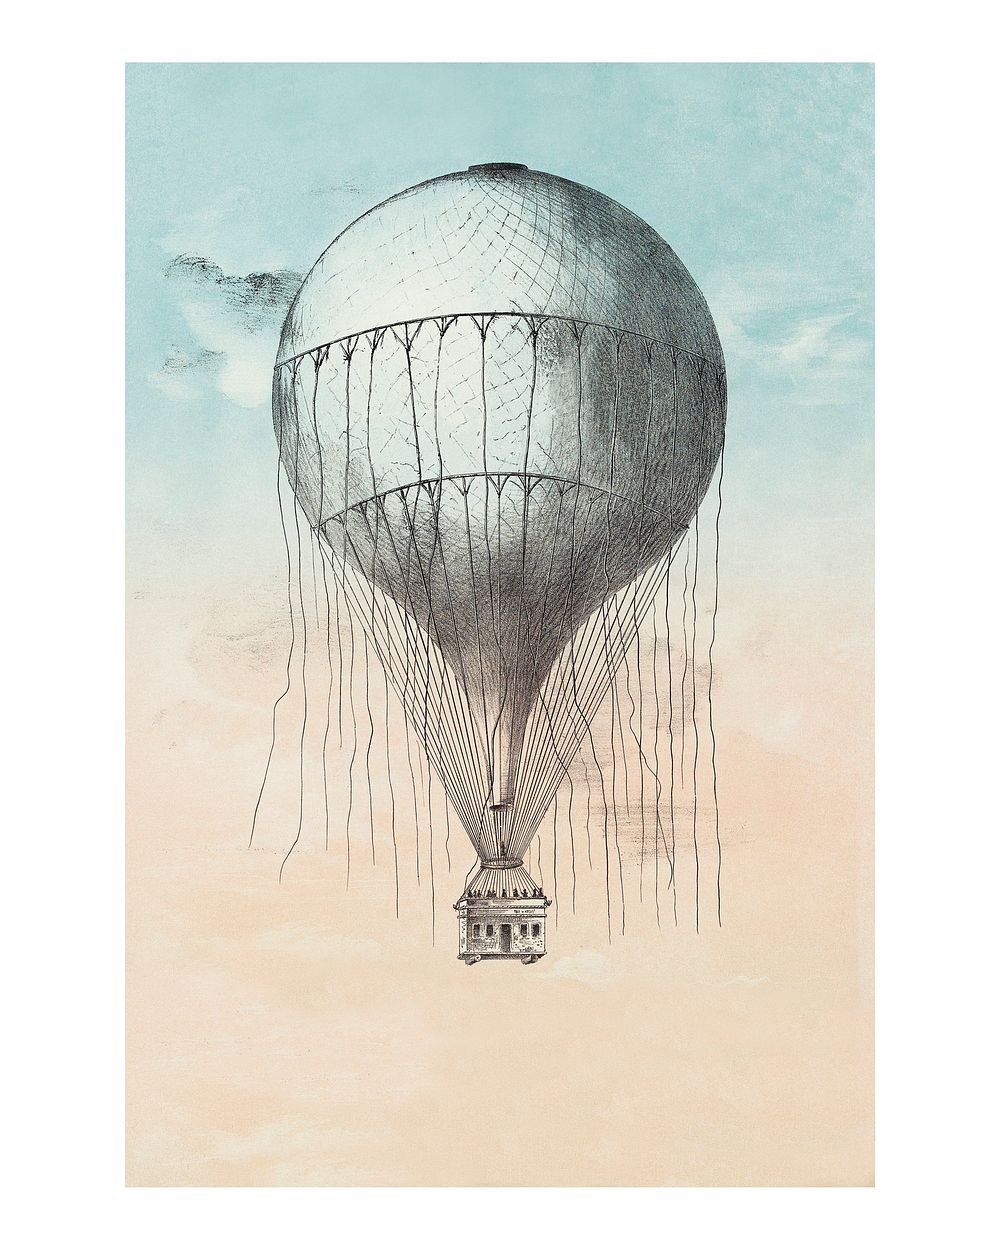 Hot air balloon vintage illustration wall art print and poster design remix from original artwork.